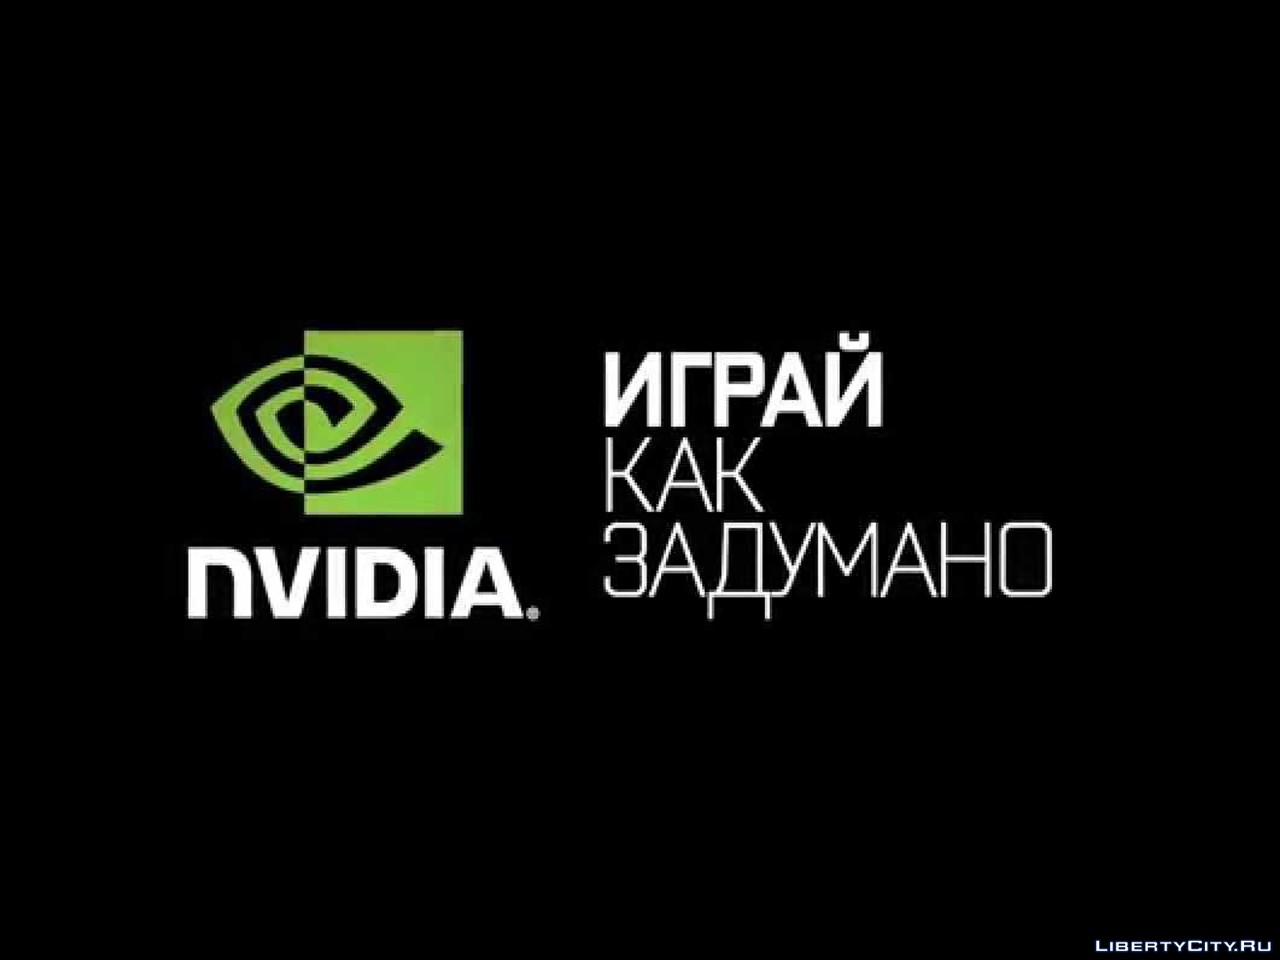 Nvidia required. NVIDIA логотип. Логотип NVIDIA GAMEWORKS. NVIDIA играй так как было задумано. Технологии нвидиа.